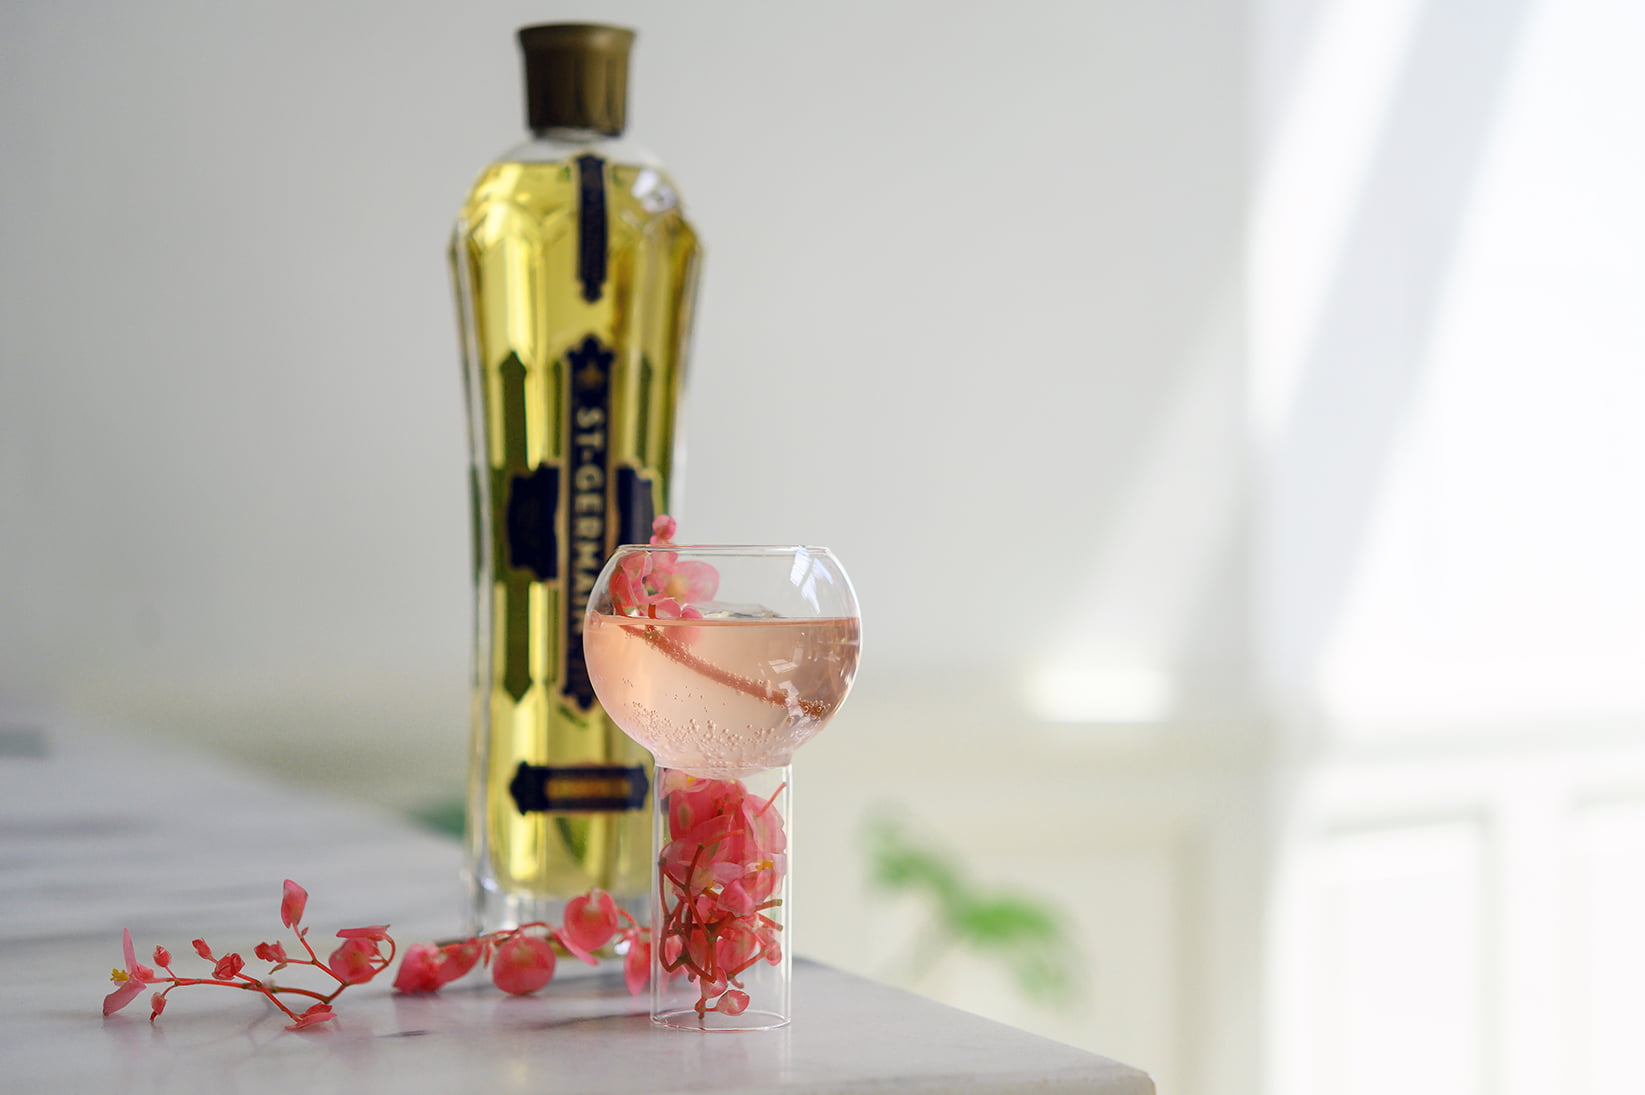 ST~GERMAIN Elderflower Liqueur - Rose Colored Spritz